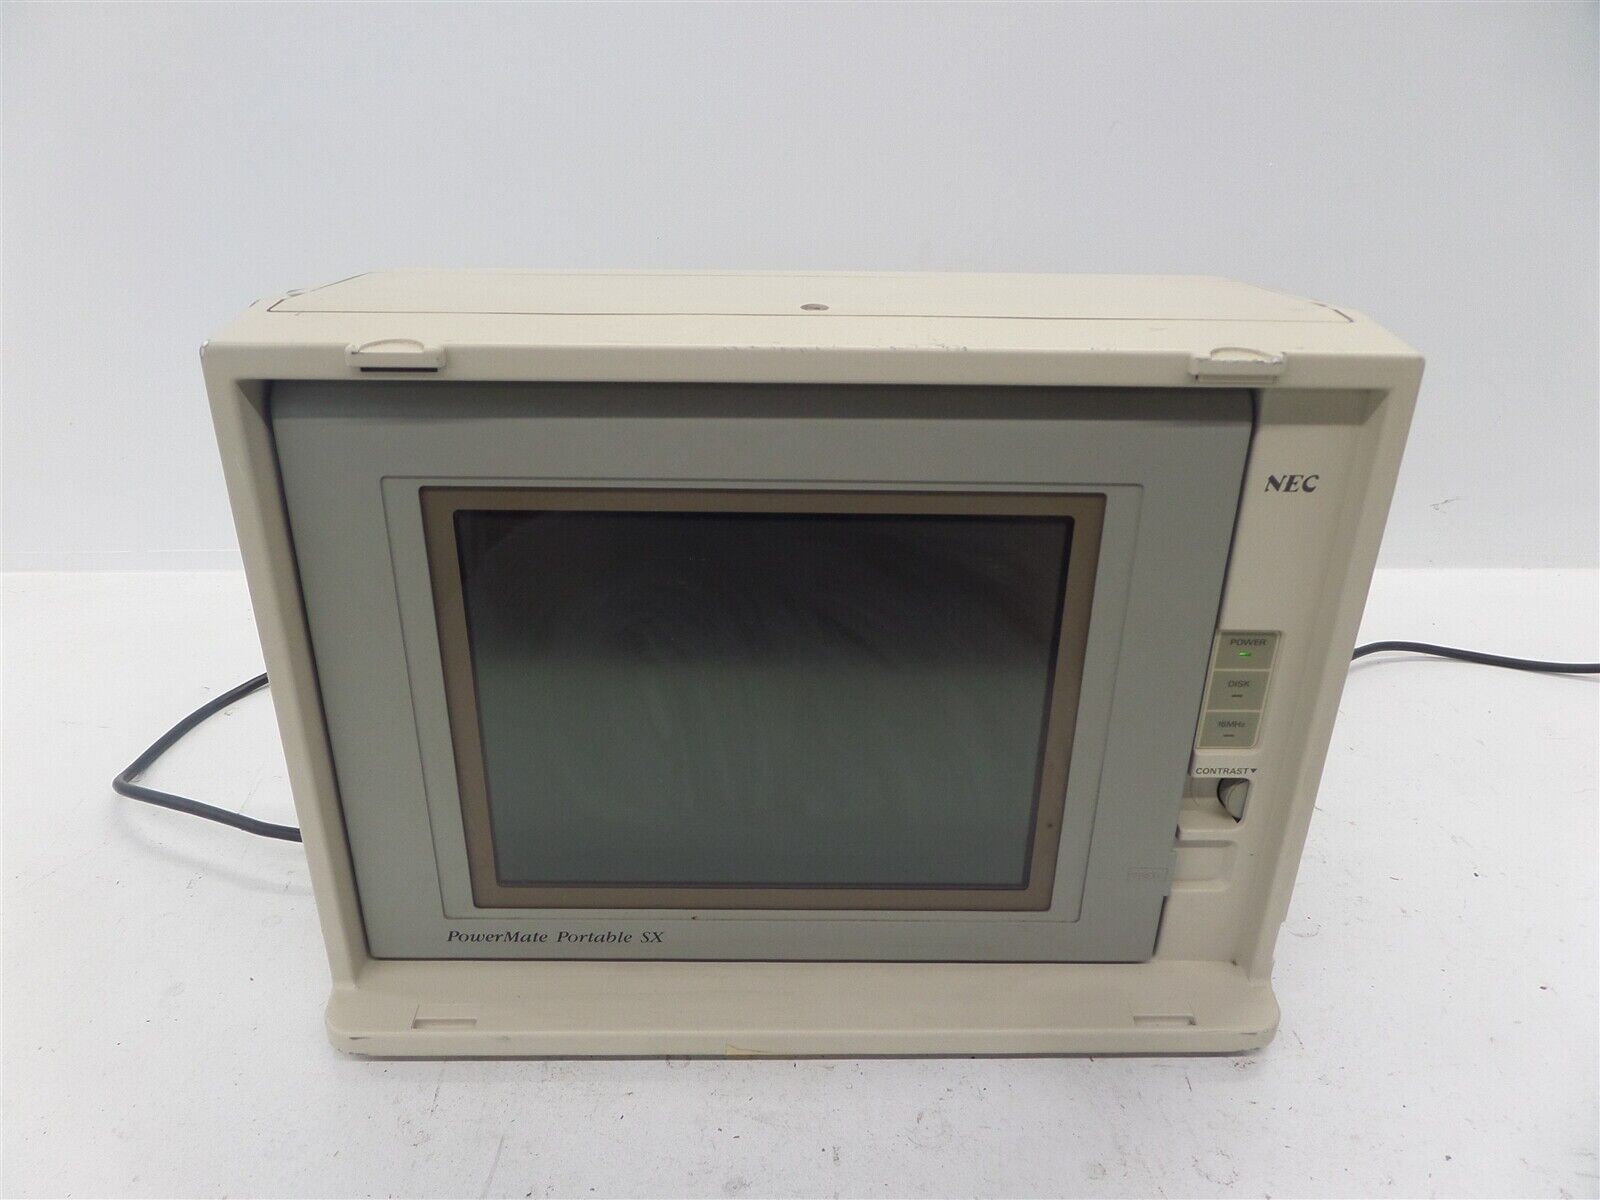 Vintage NEC PowerMate APC-H702x NEC - Display Issue